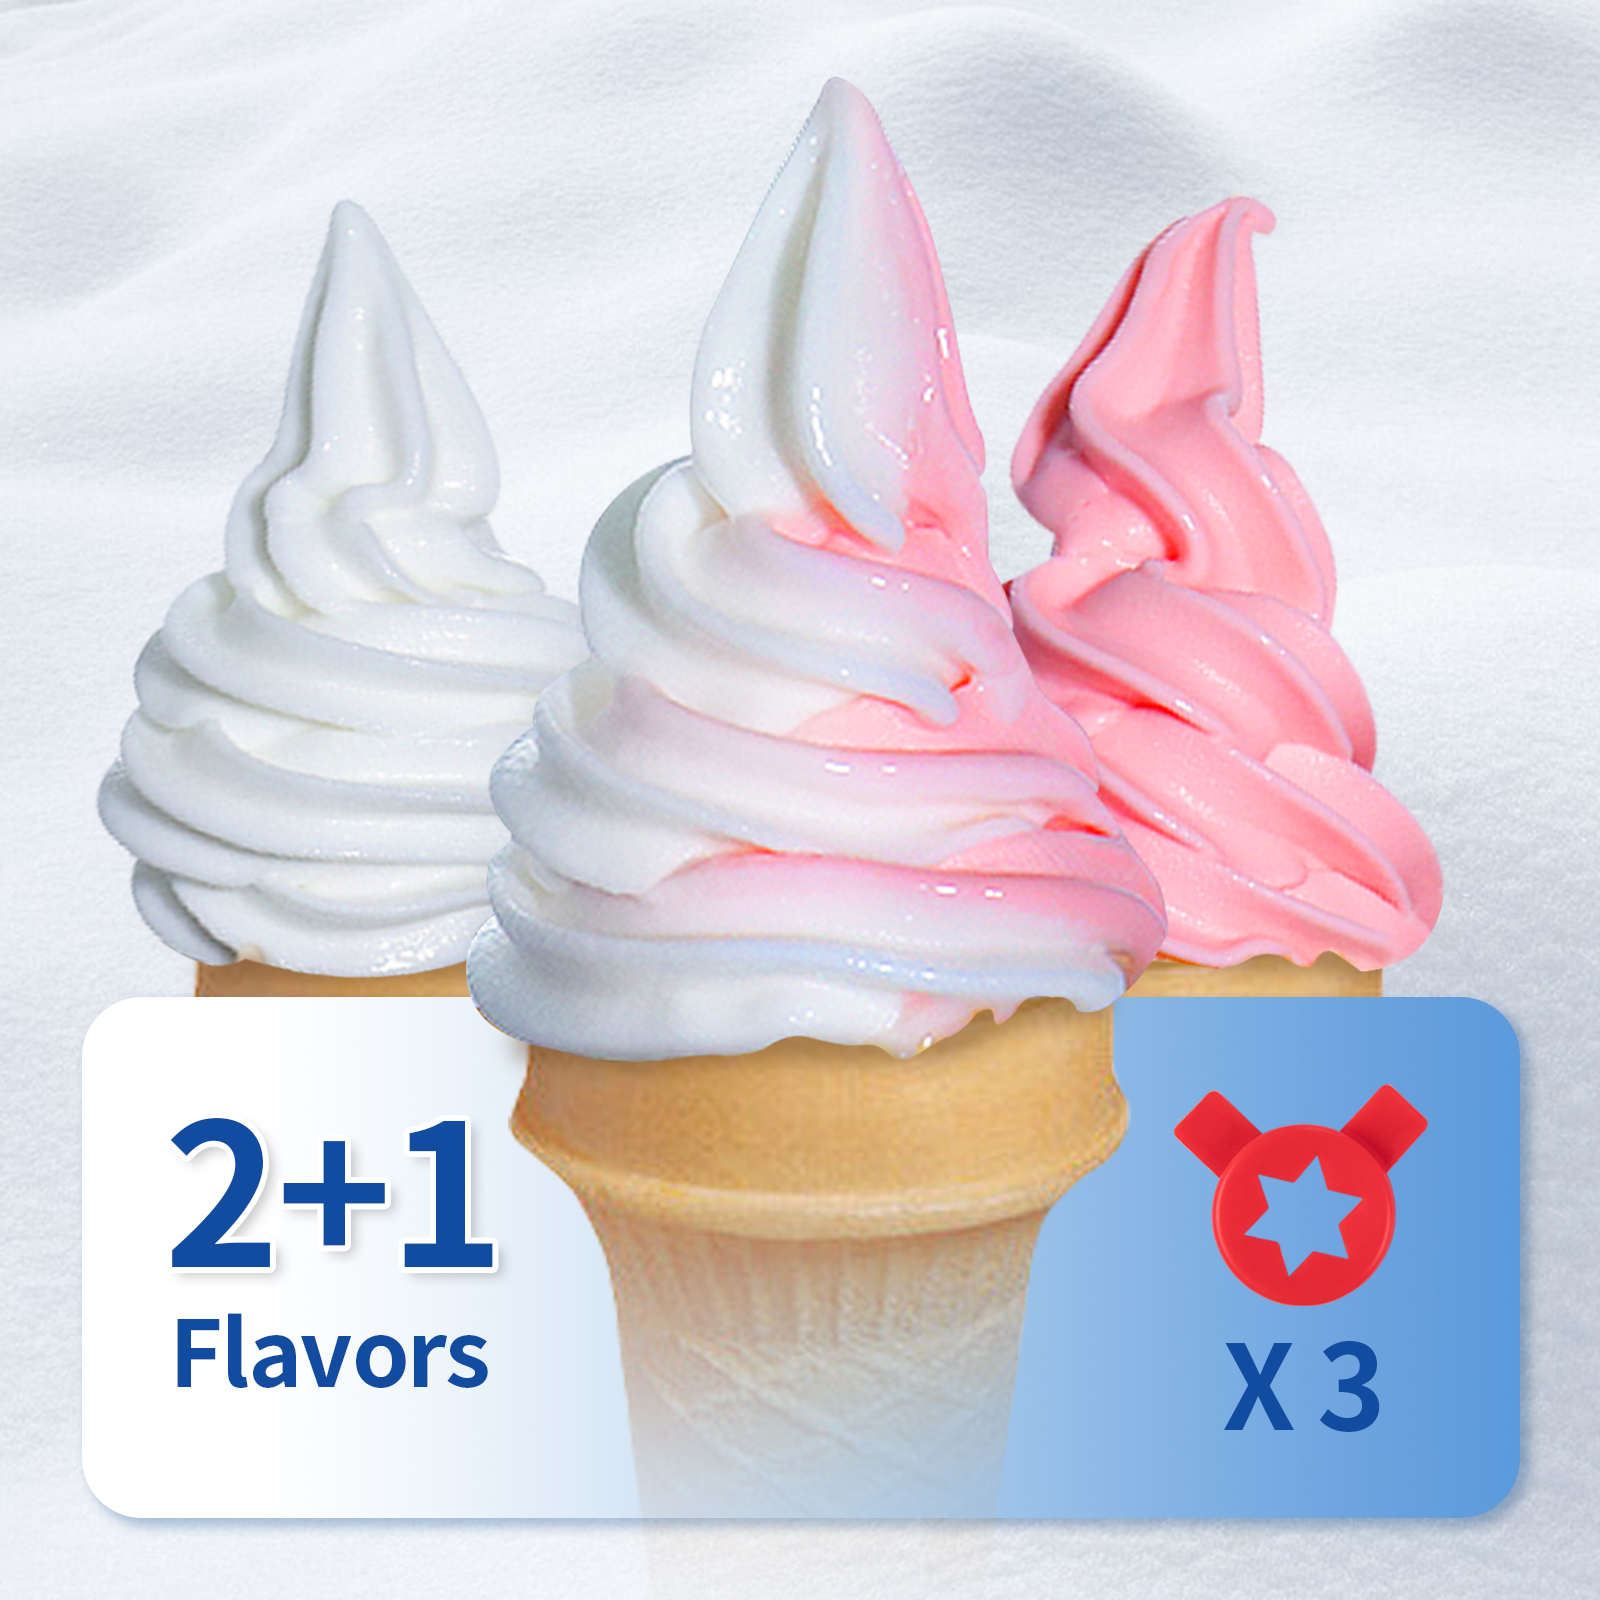 VEVOR Commercial Ice Cream Maker,20-28L/H Yield,2+1 Flavors Soft